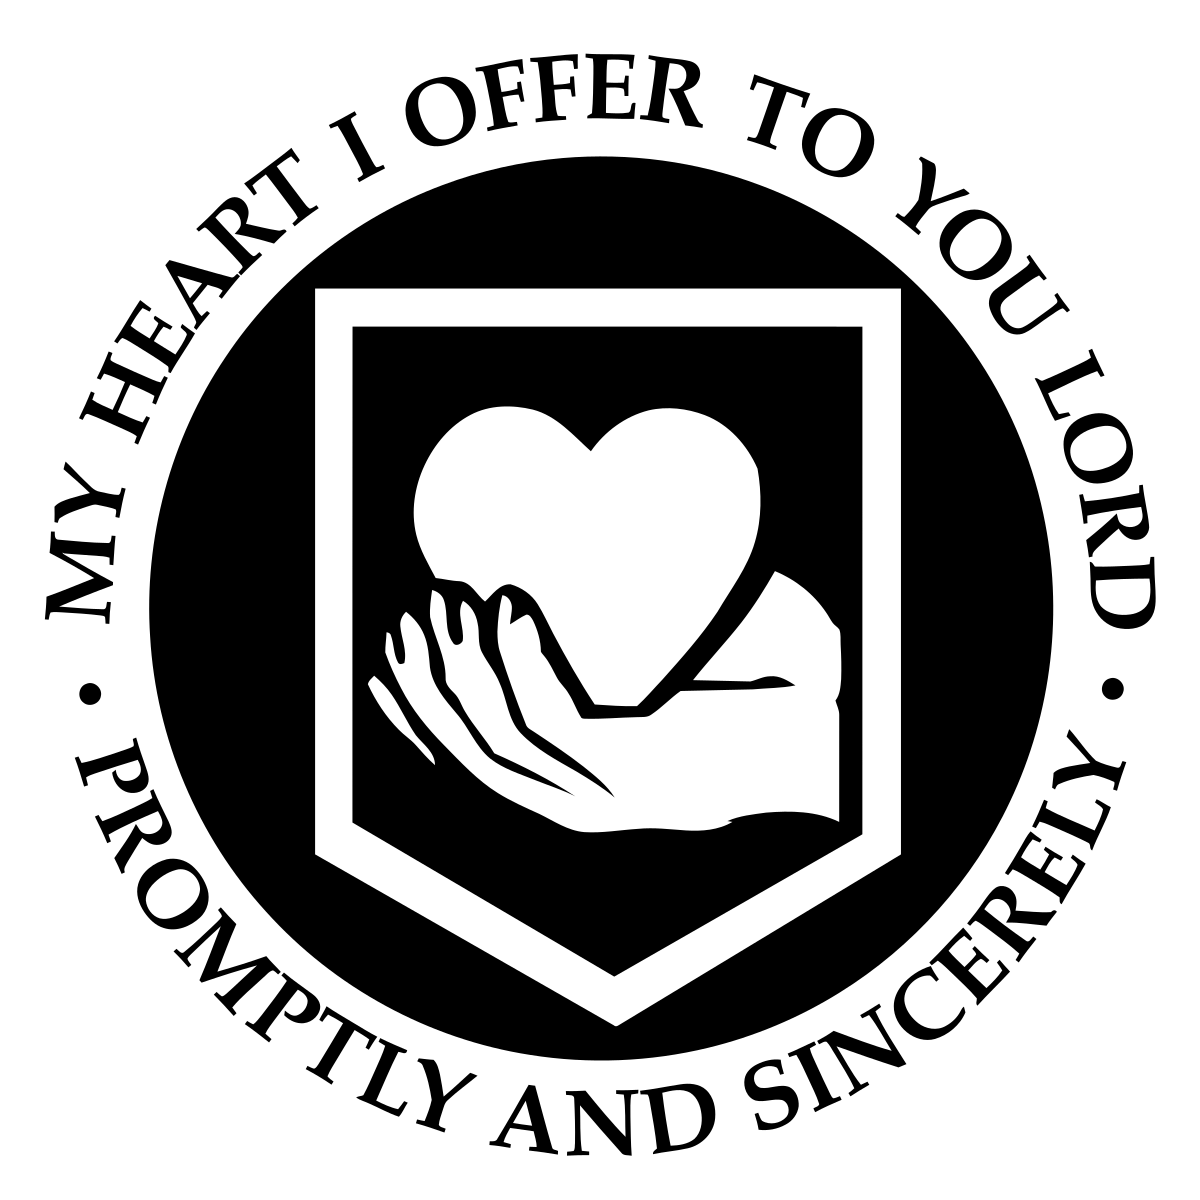 Best Sex Ever Hearts On Fire - Calvin University (Michigan) - Wikipedia